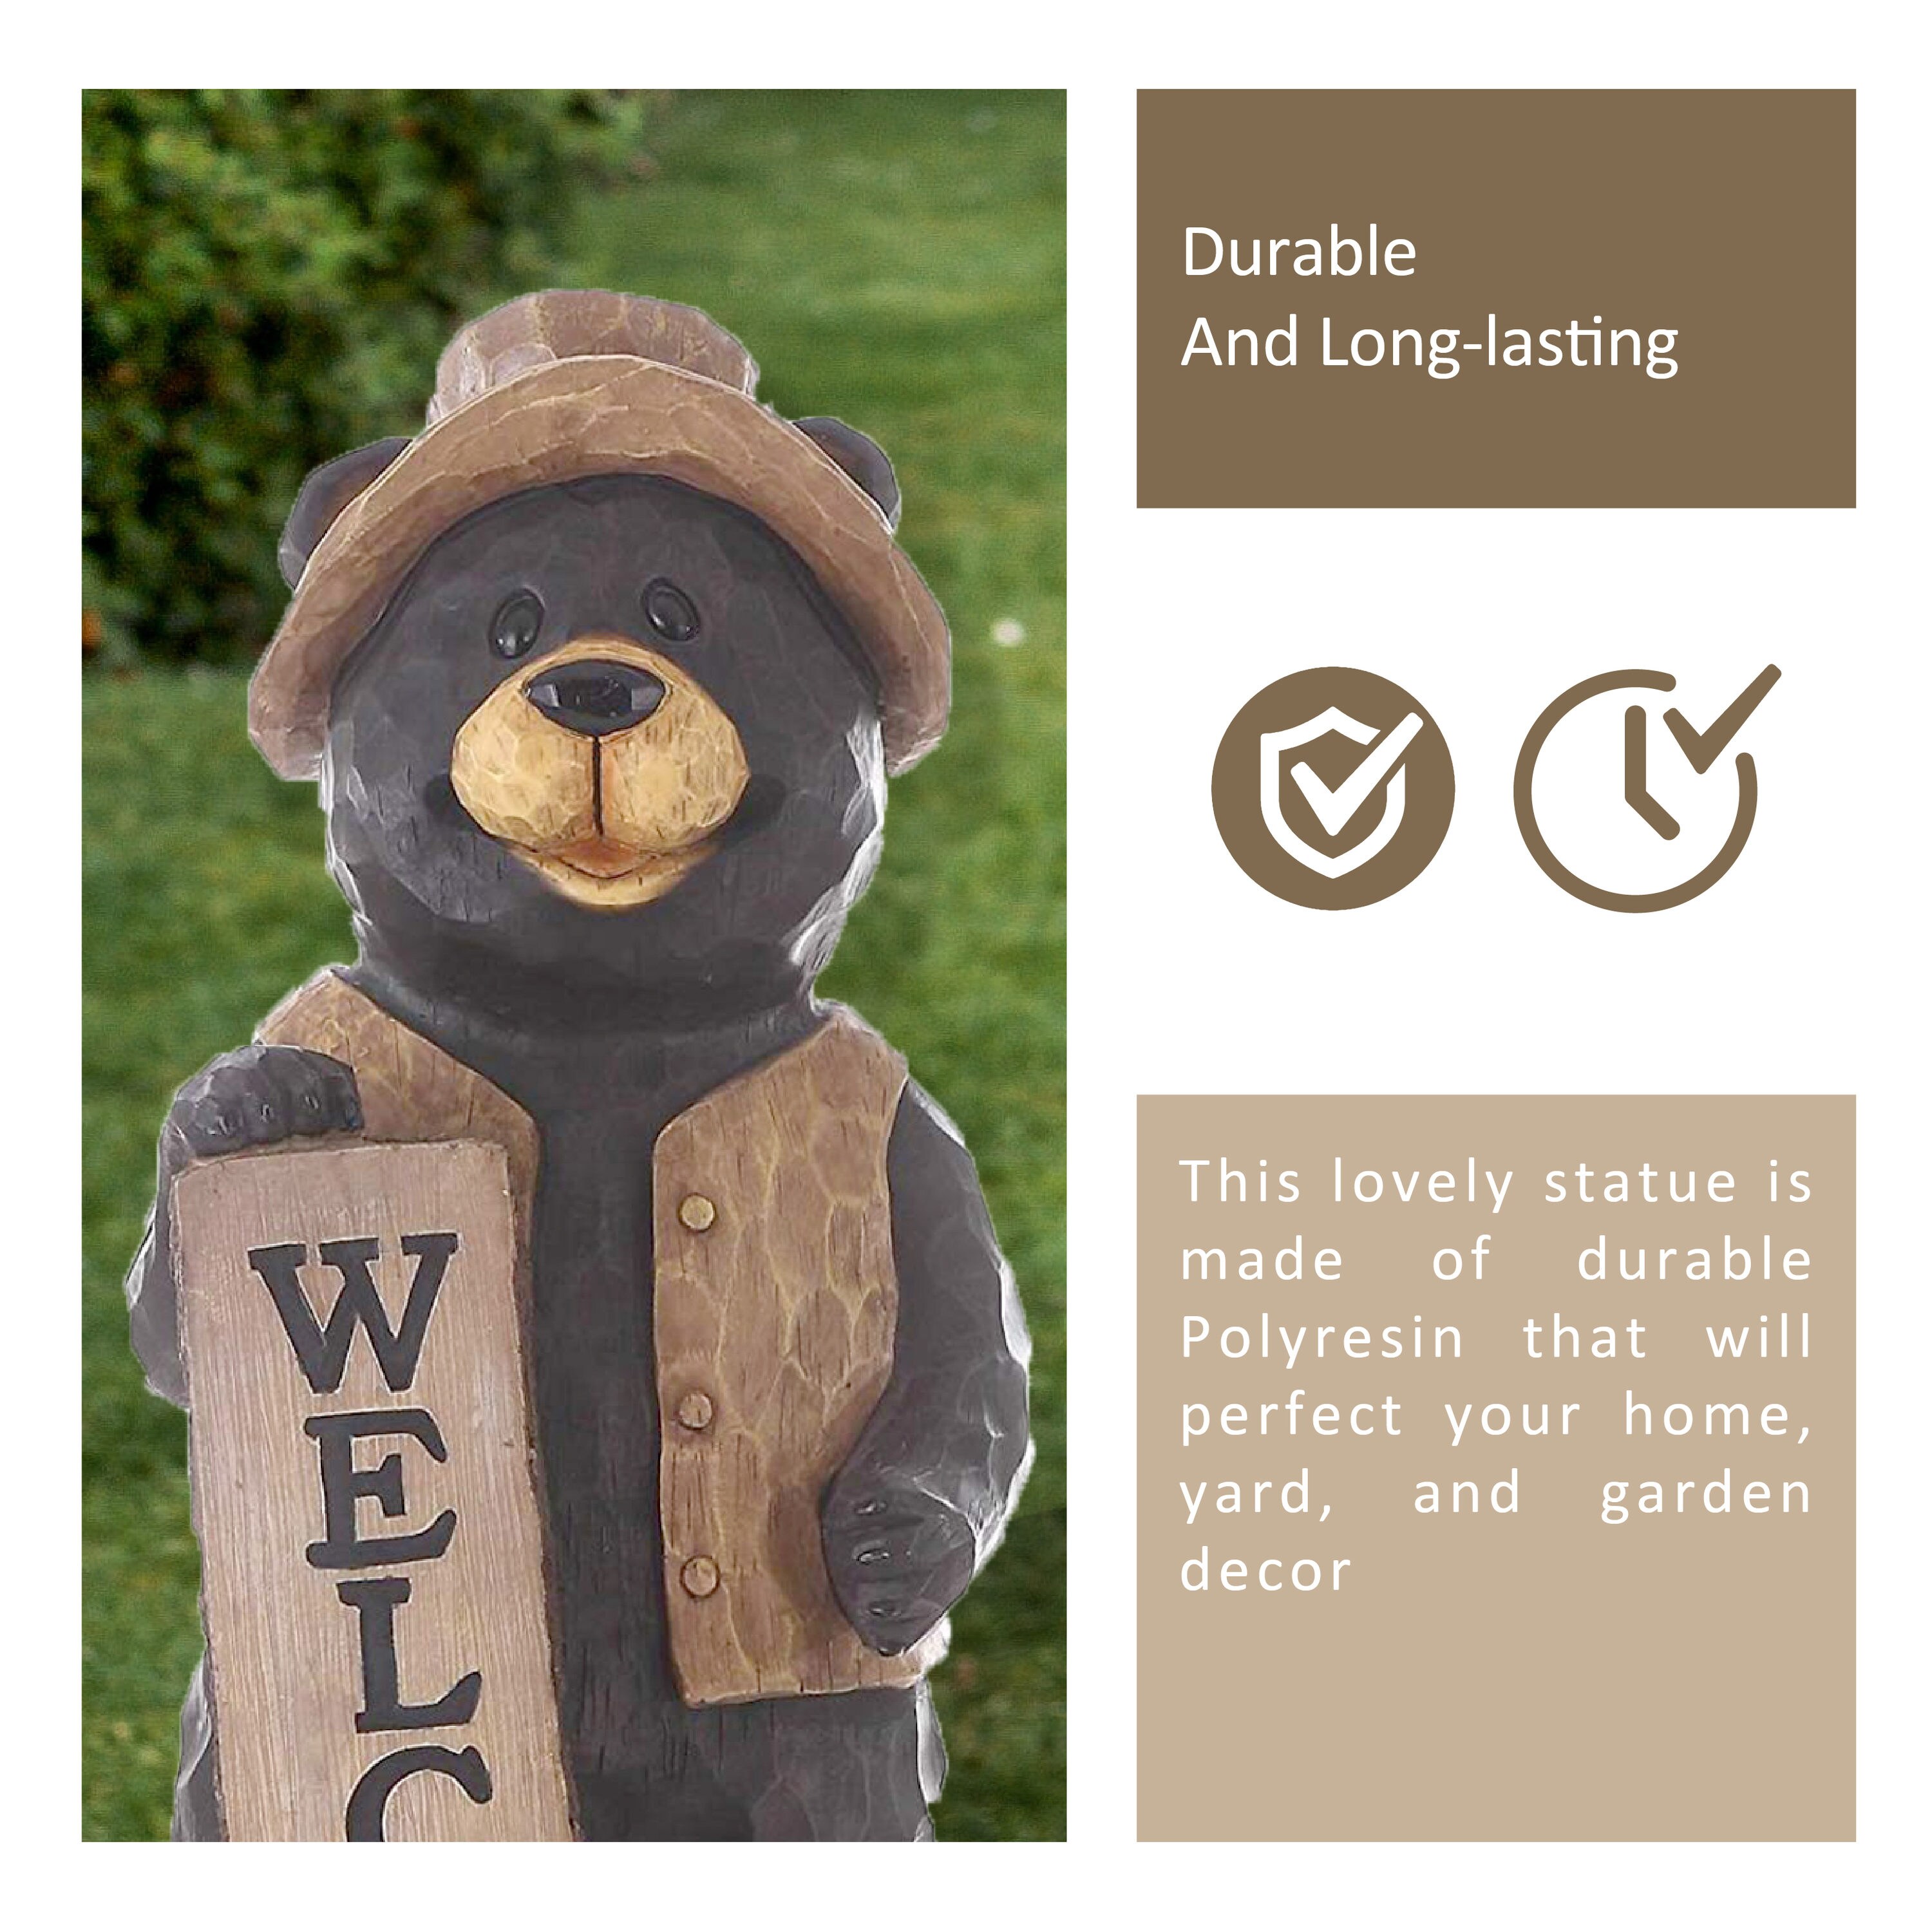 Hi-Line Gift Ltd. Bear Holding Welcome Sign Garden Statue & Reviews